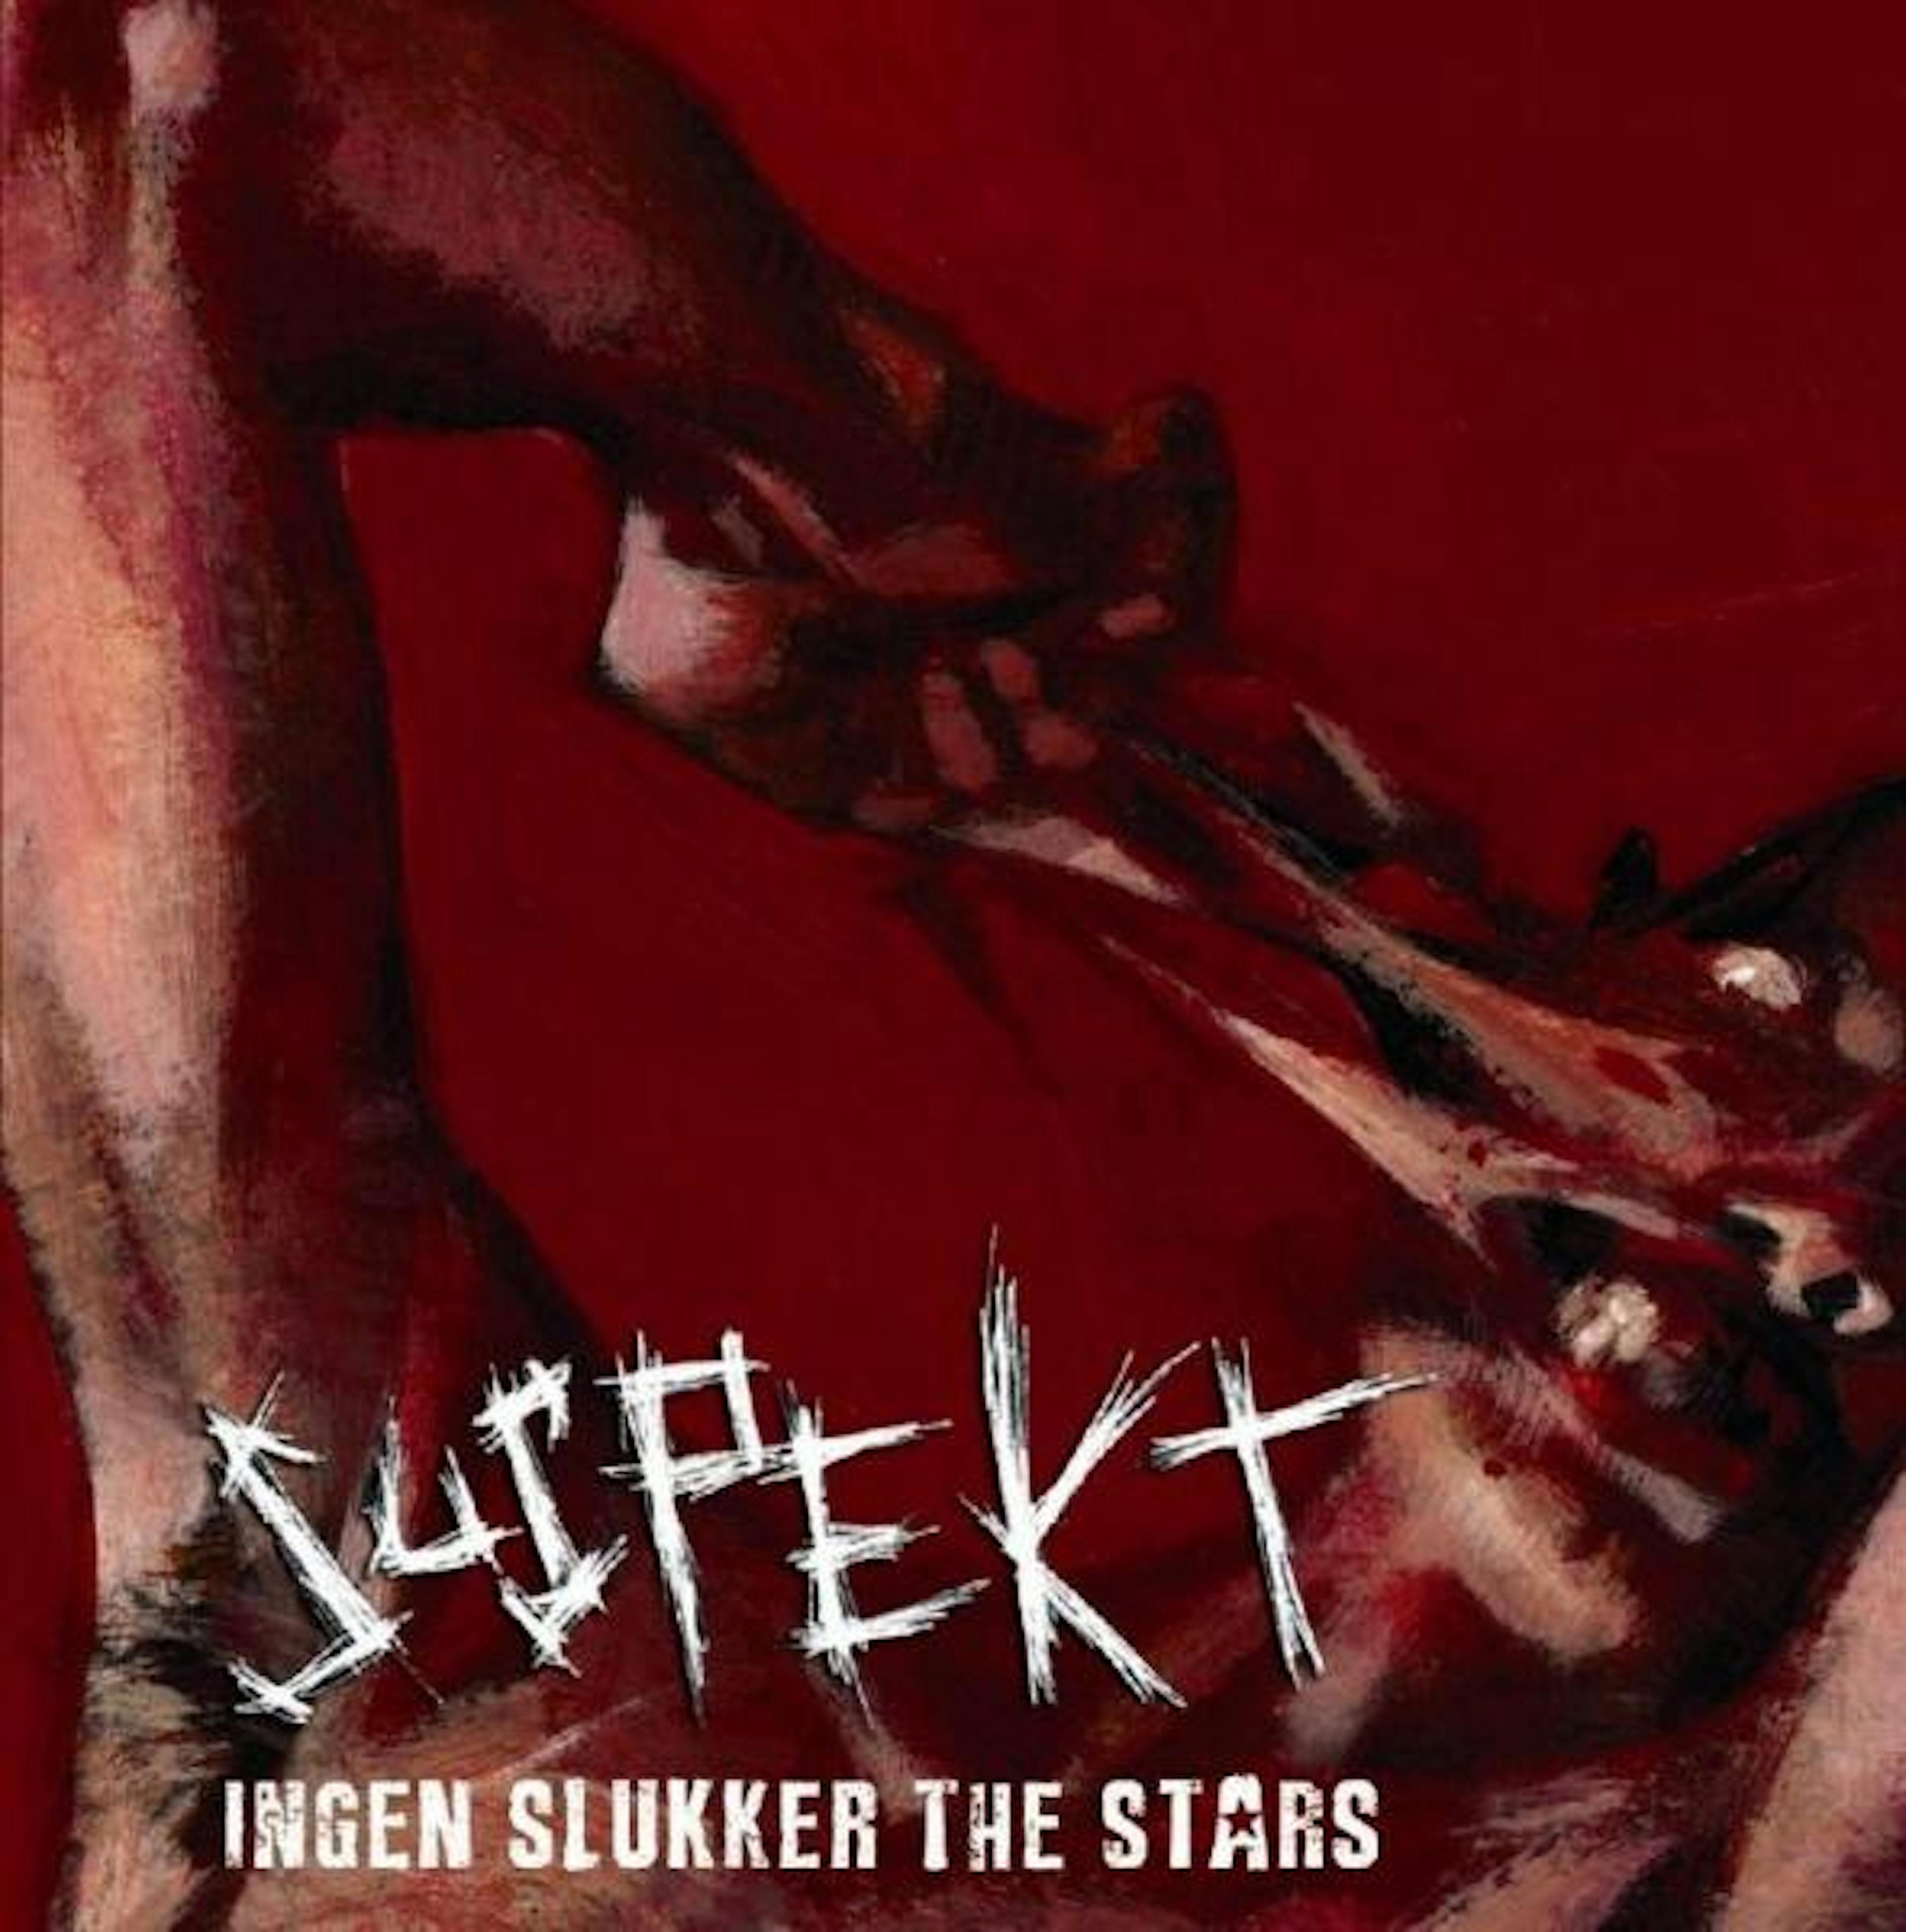 Suspekt CD med titlen, Ingen slukker the stars